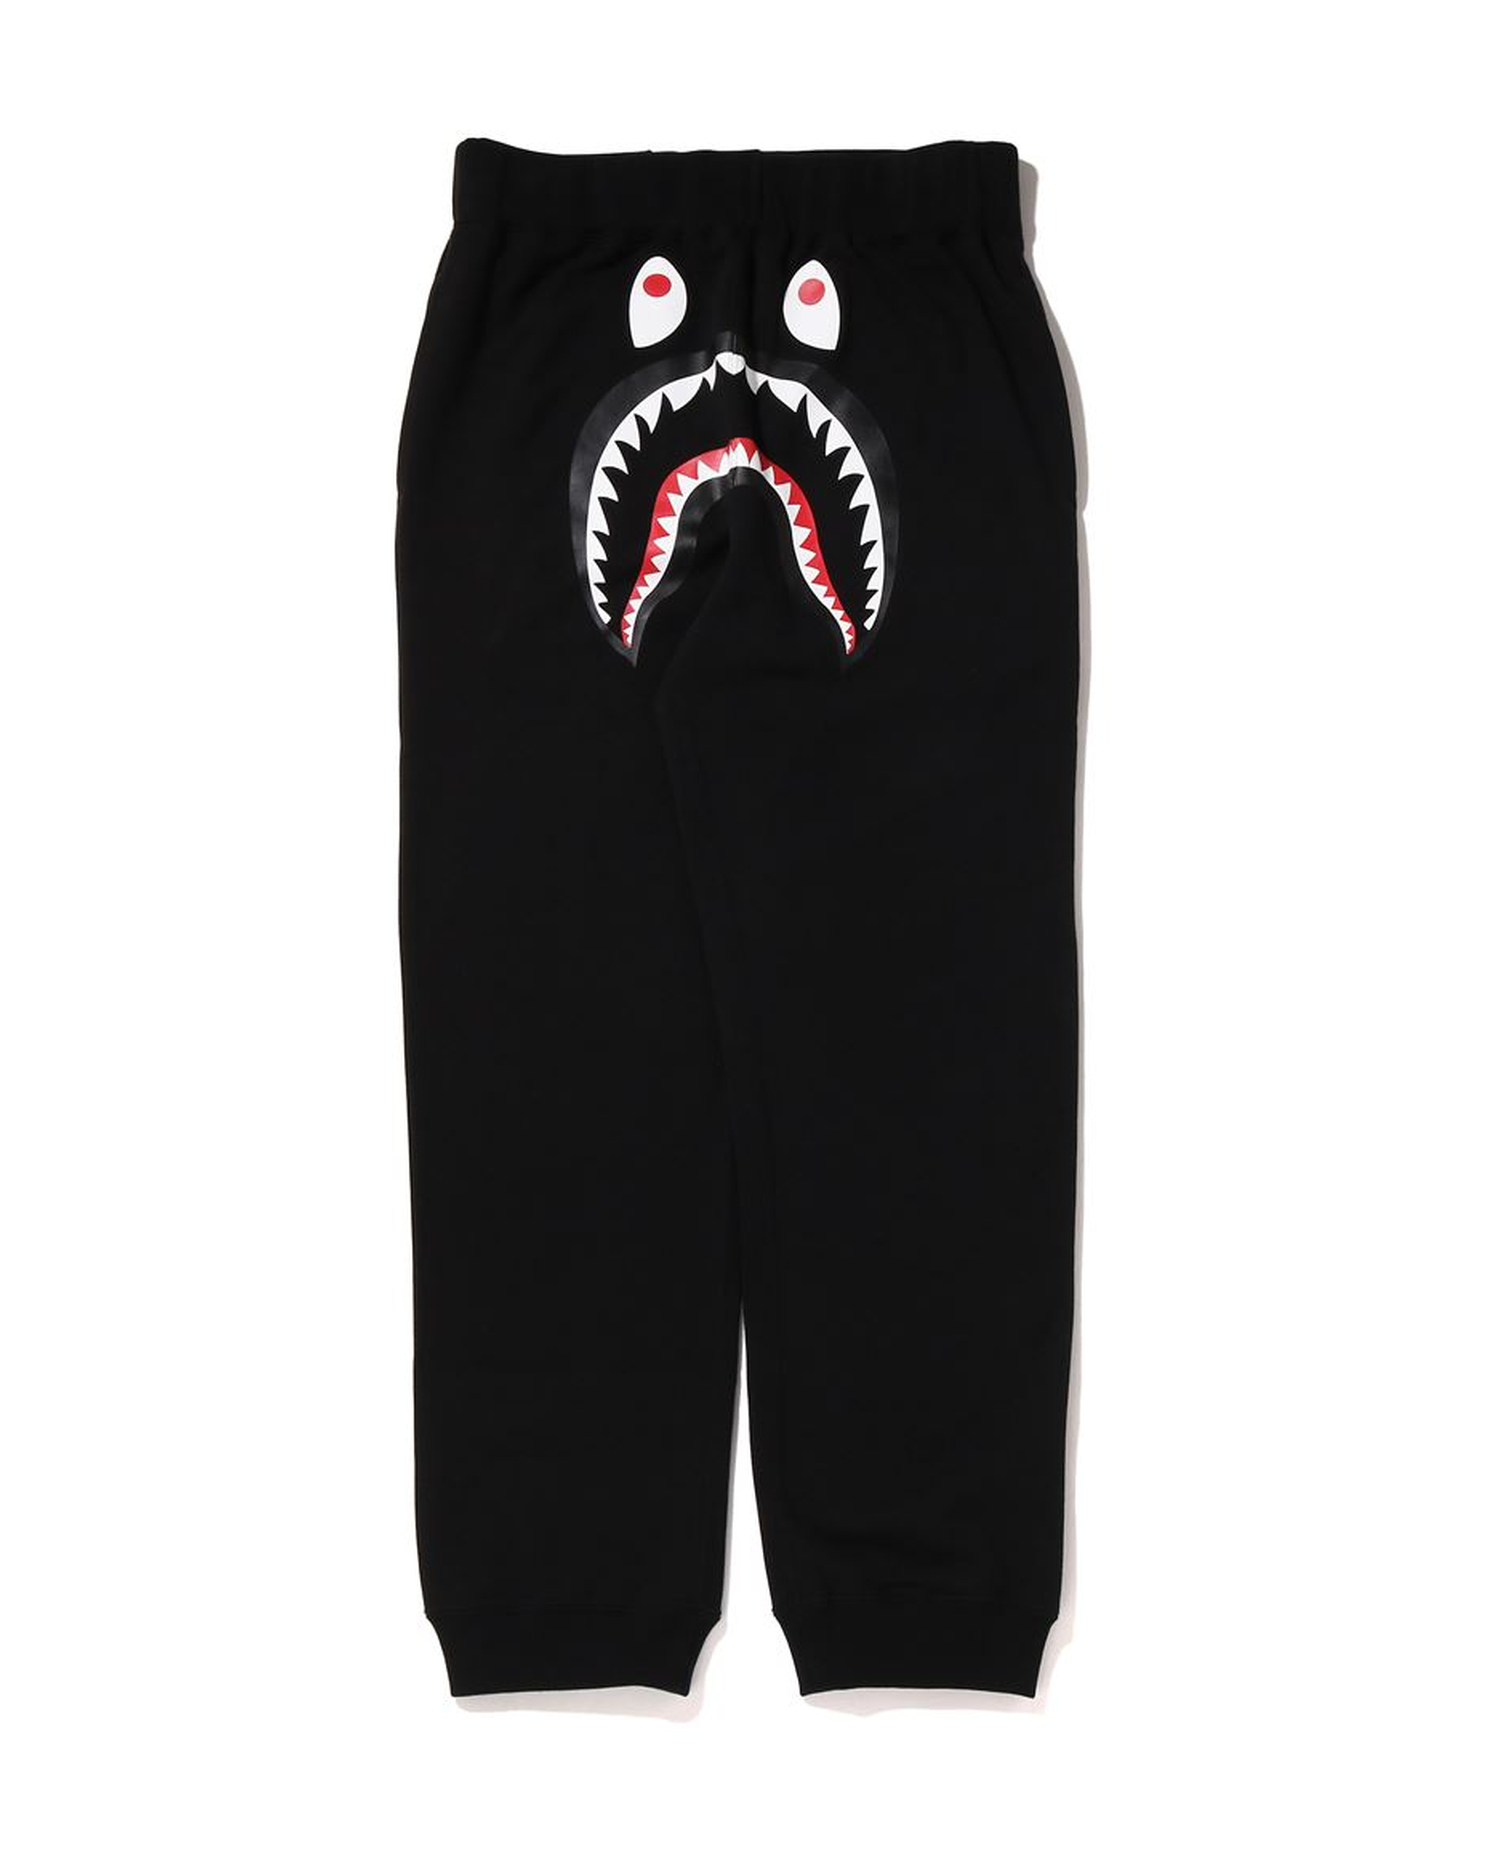 Shop Shark Sweatpants Online | BAPE